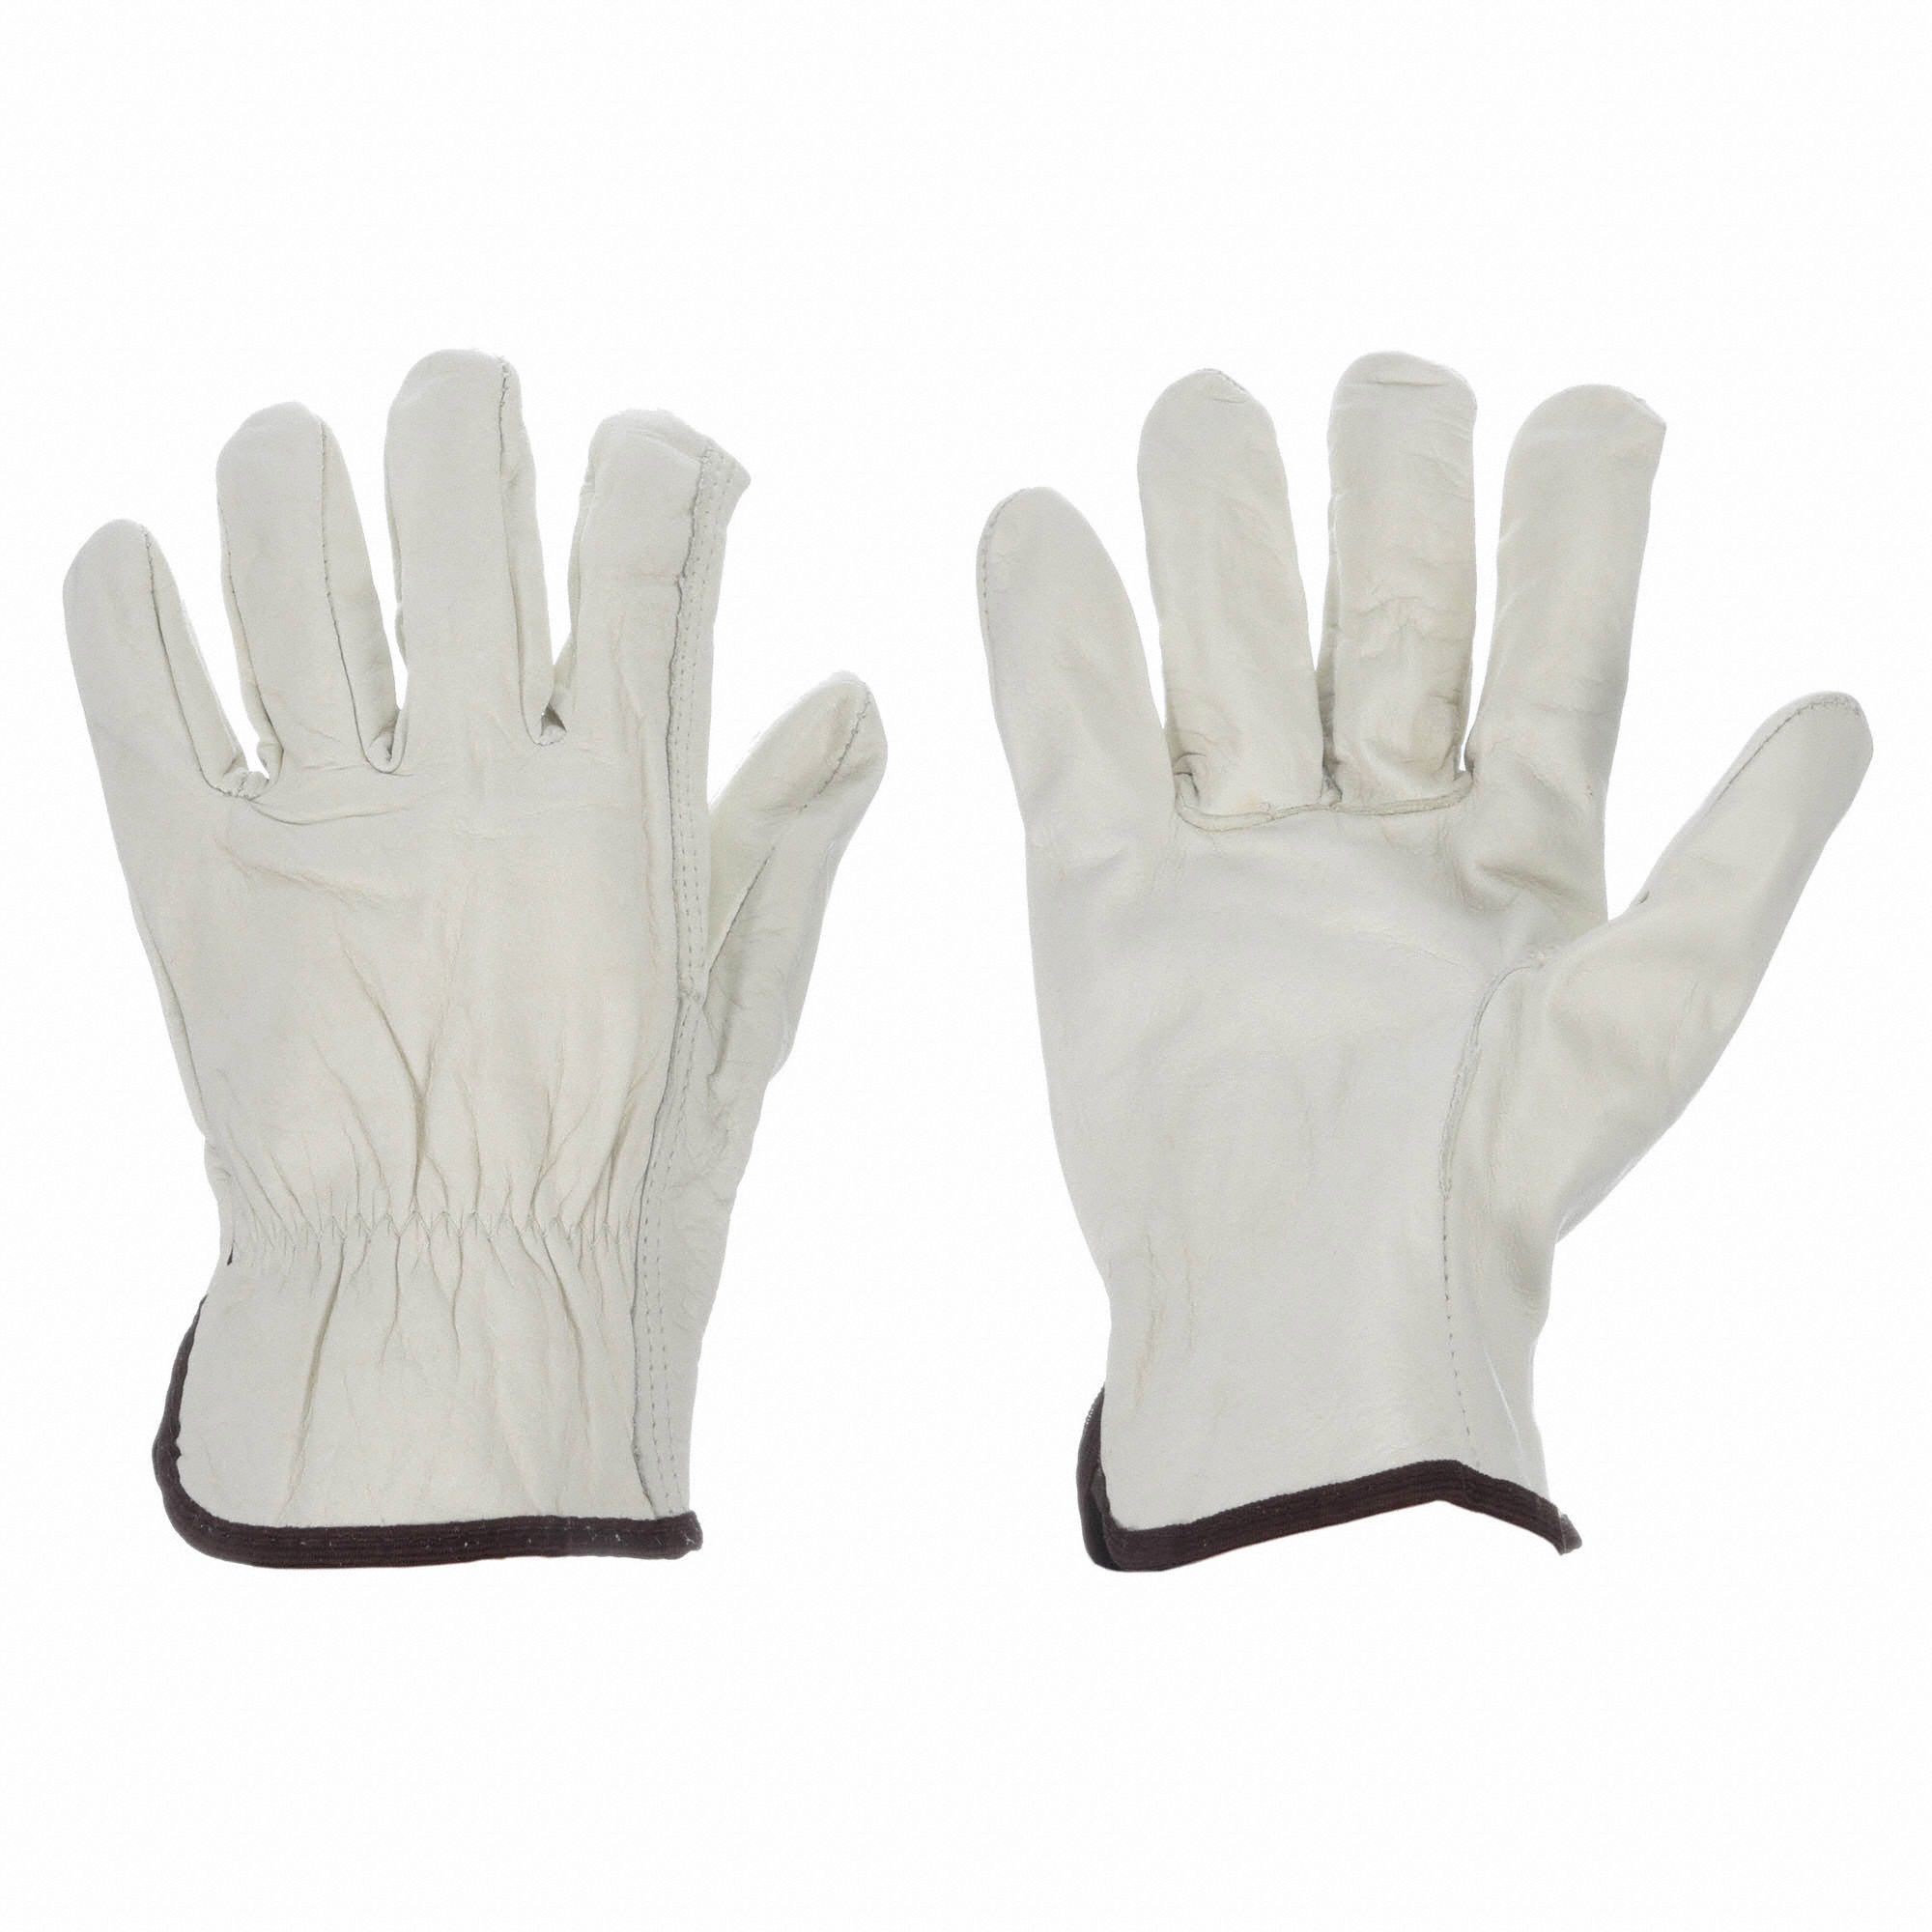 Long High Voltage Rubber Work Gloves